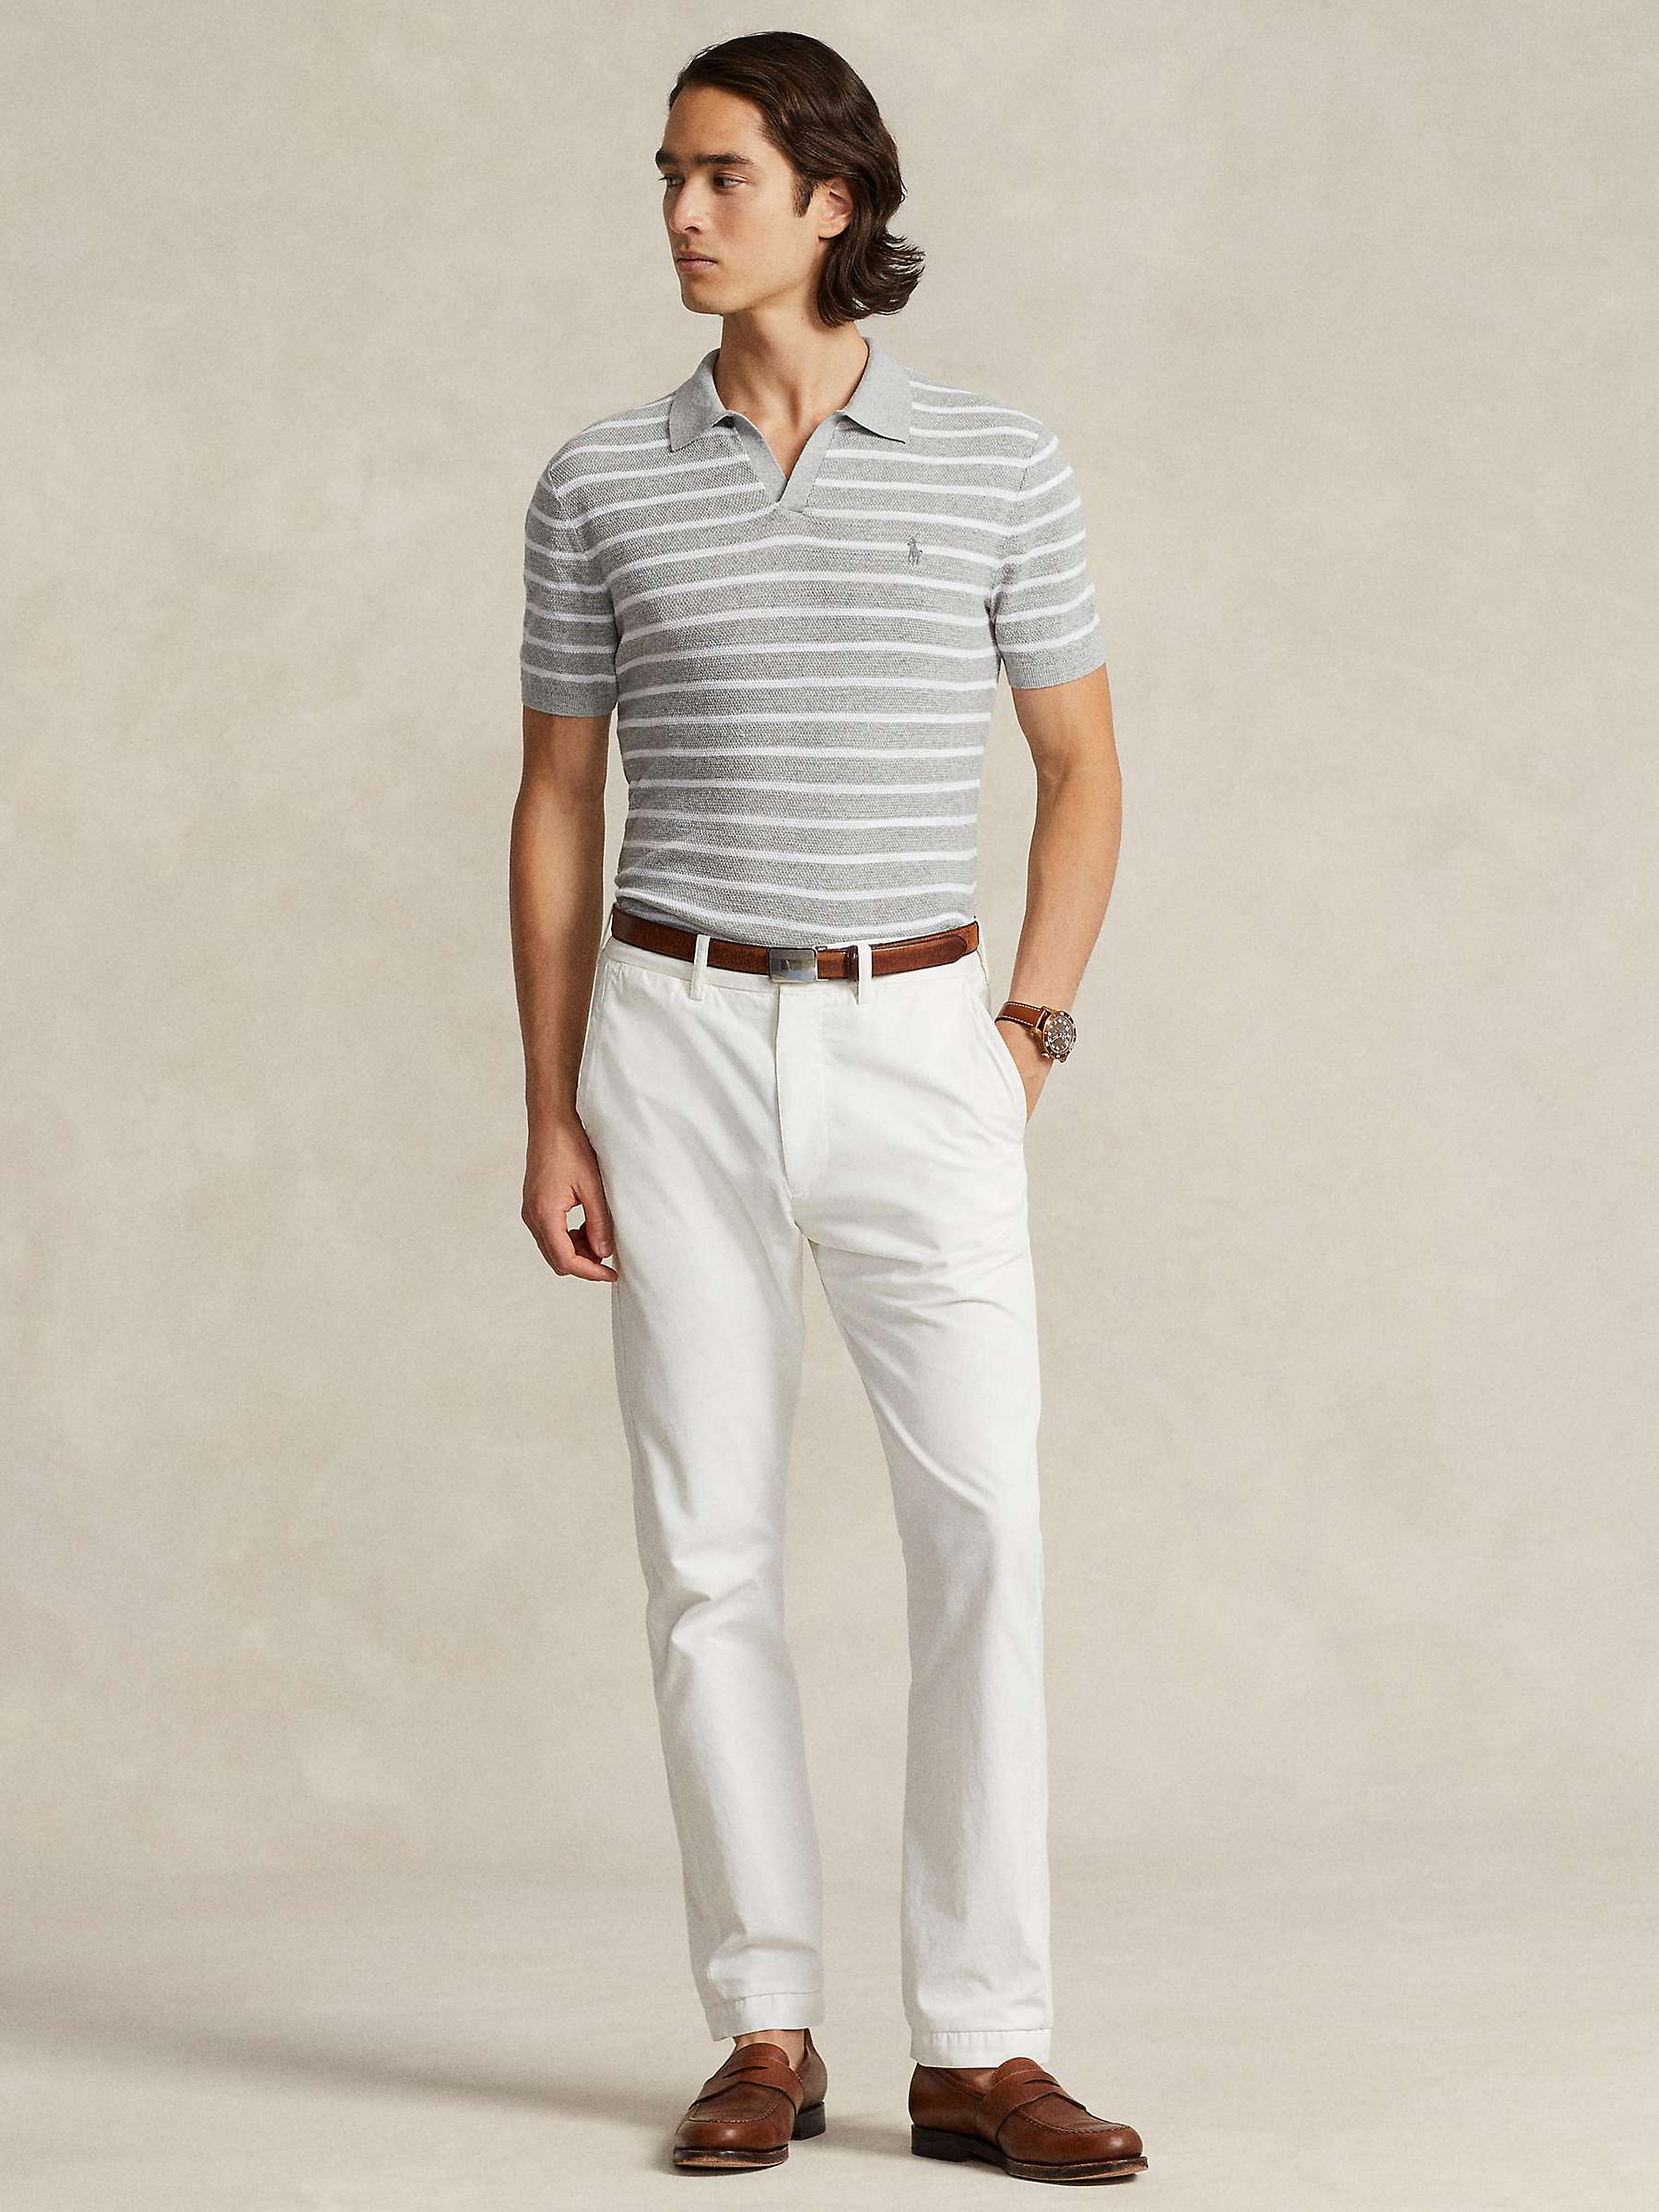 Buy Polo Ralph Lauren Striped Linen Blend Polo Shirt, Grey Online at johnlewis.com